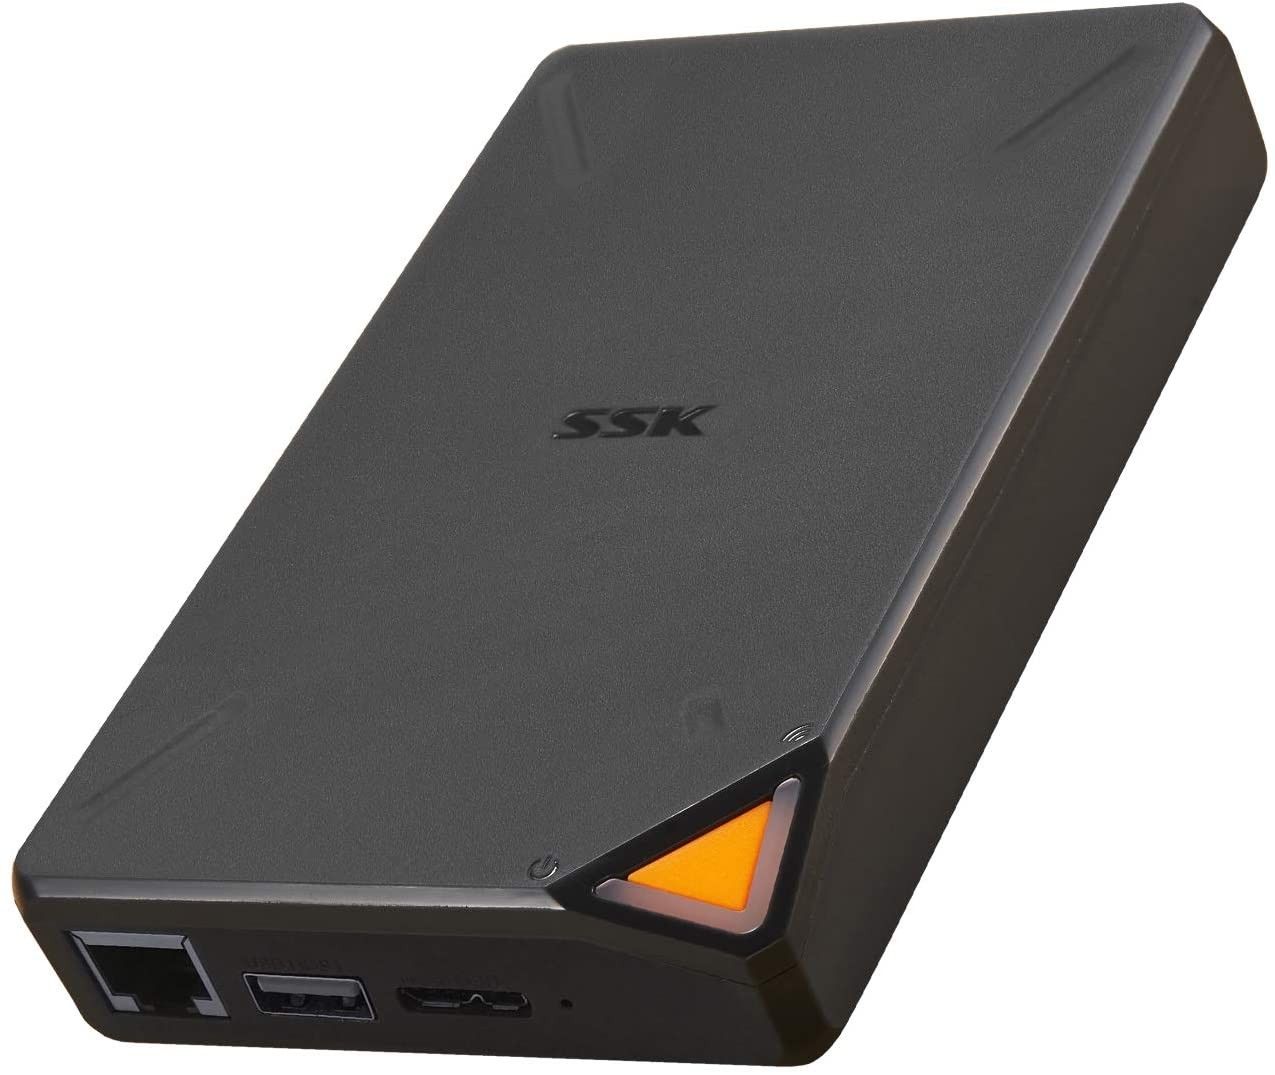 SSK Tragbares NAS mit 1 TB, externe Wireless-SSD